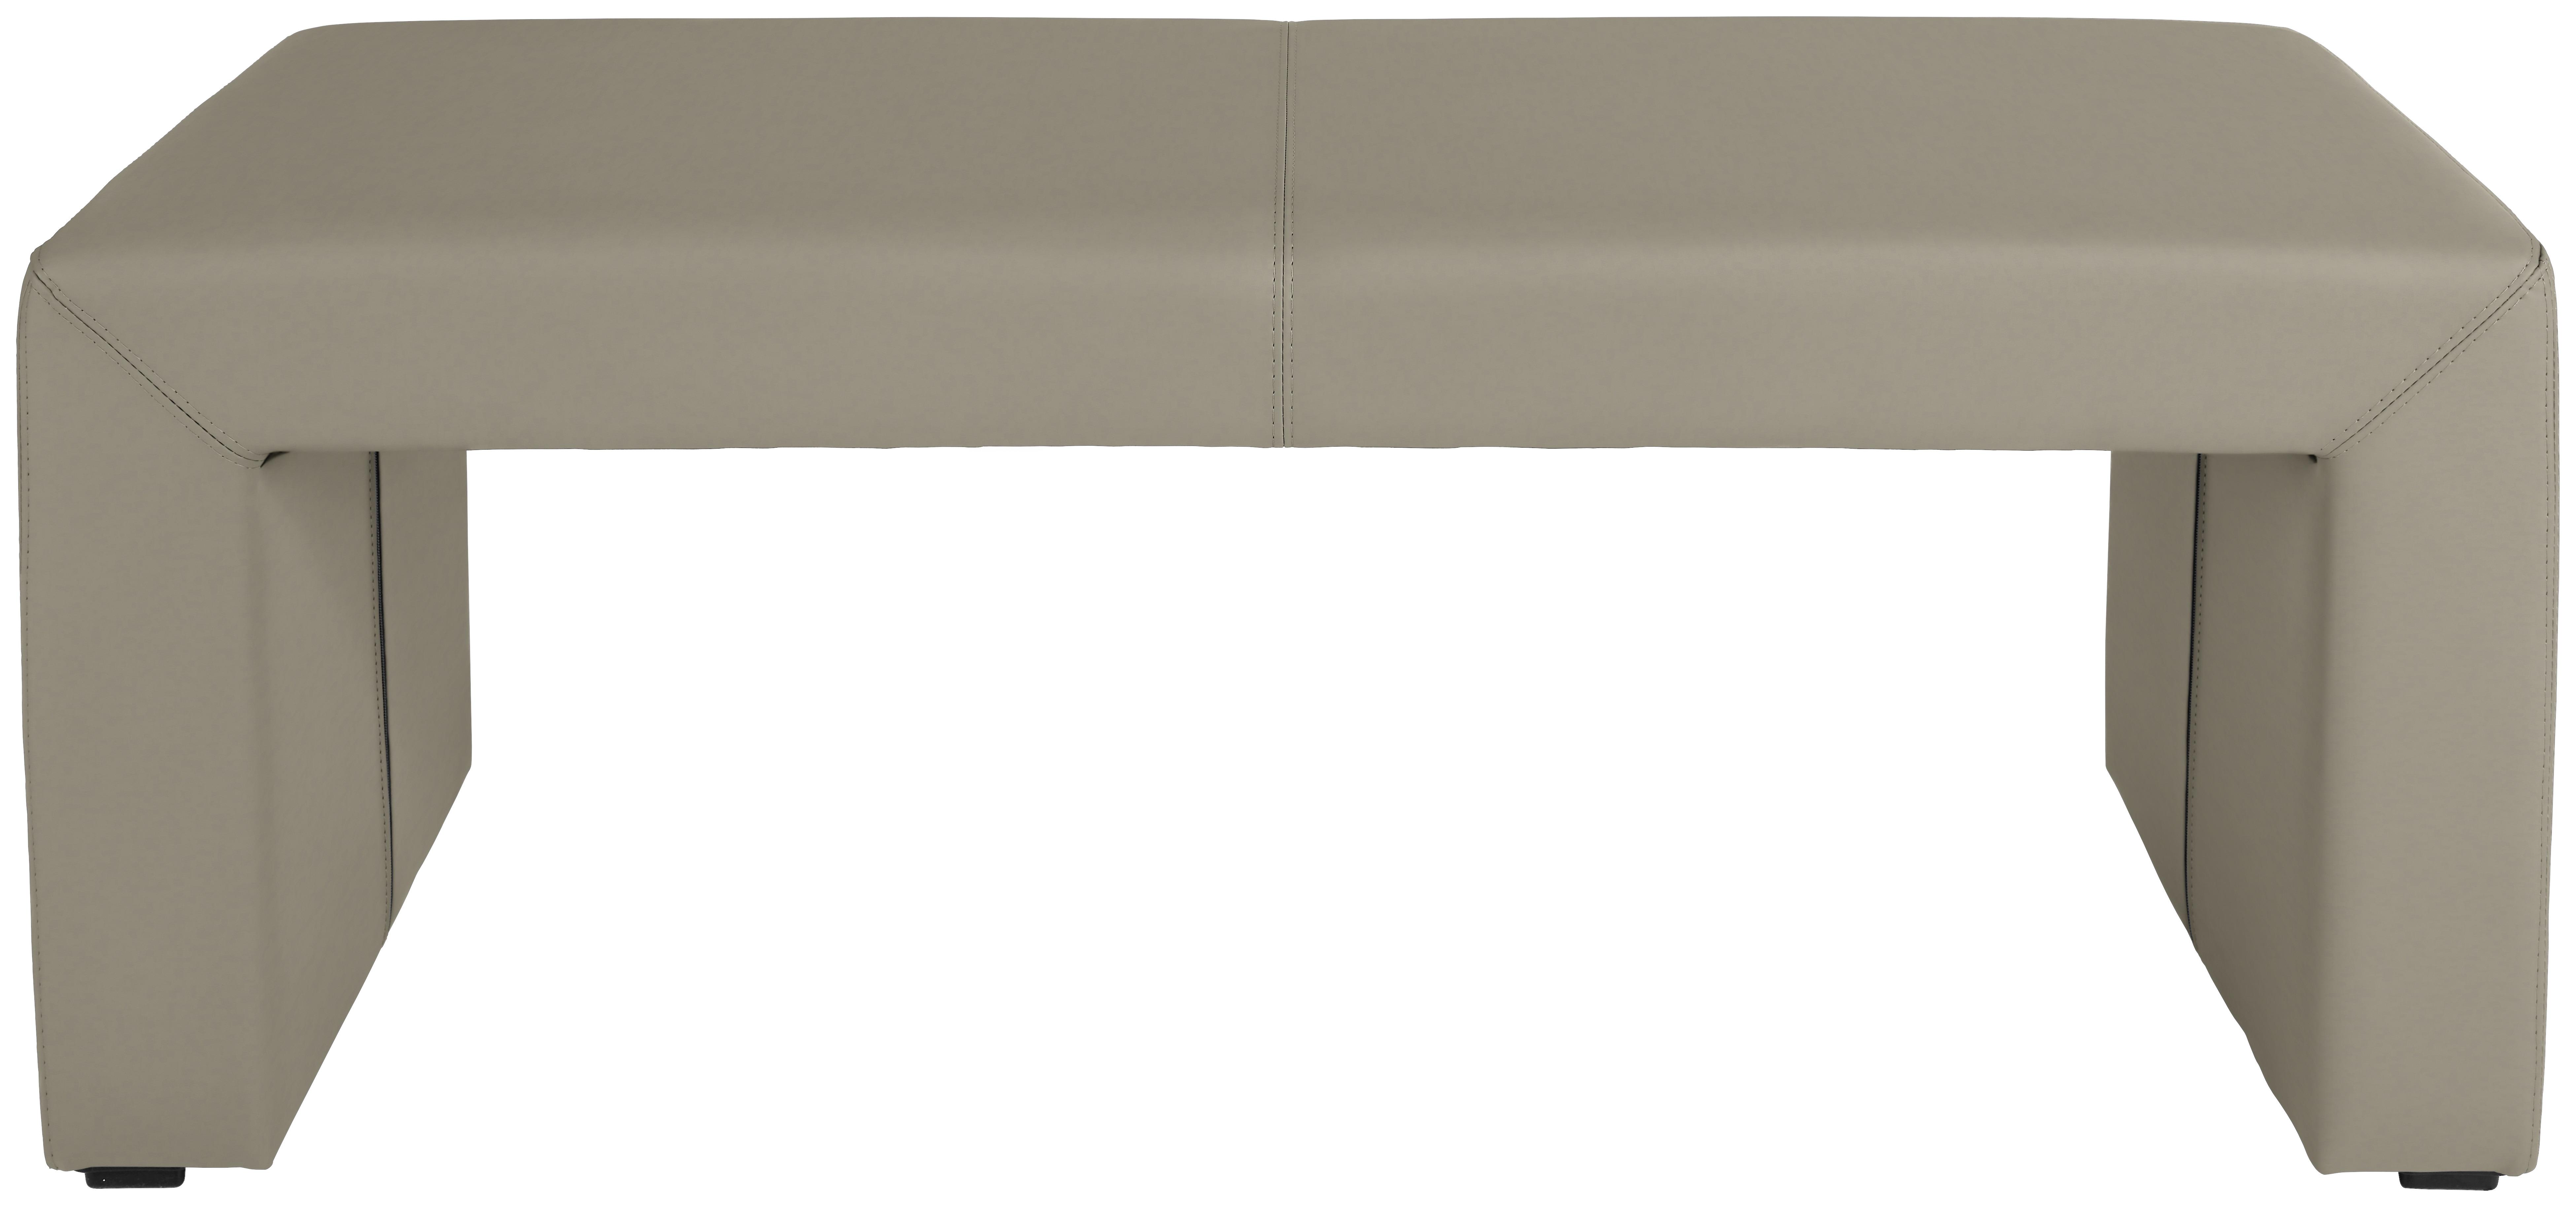 Sitzbank Gepolstert Taupe Valun II B: 180 cm - Taupe, KONVENTIONELL, Holz/Holzwerkstoff (180/49/48cm)